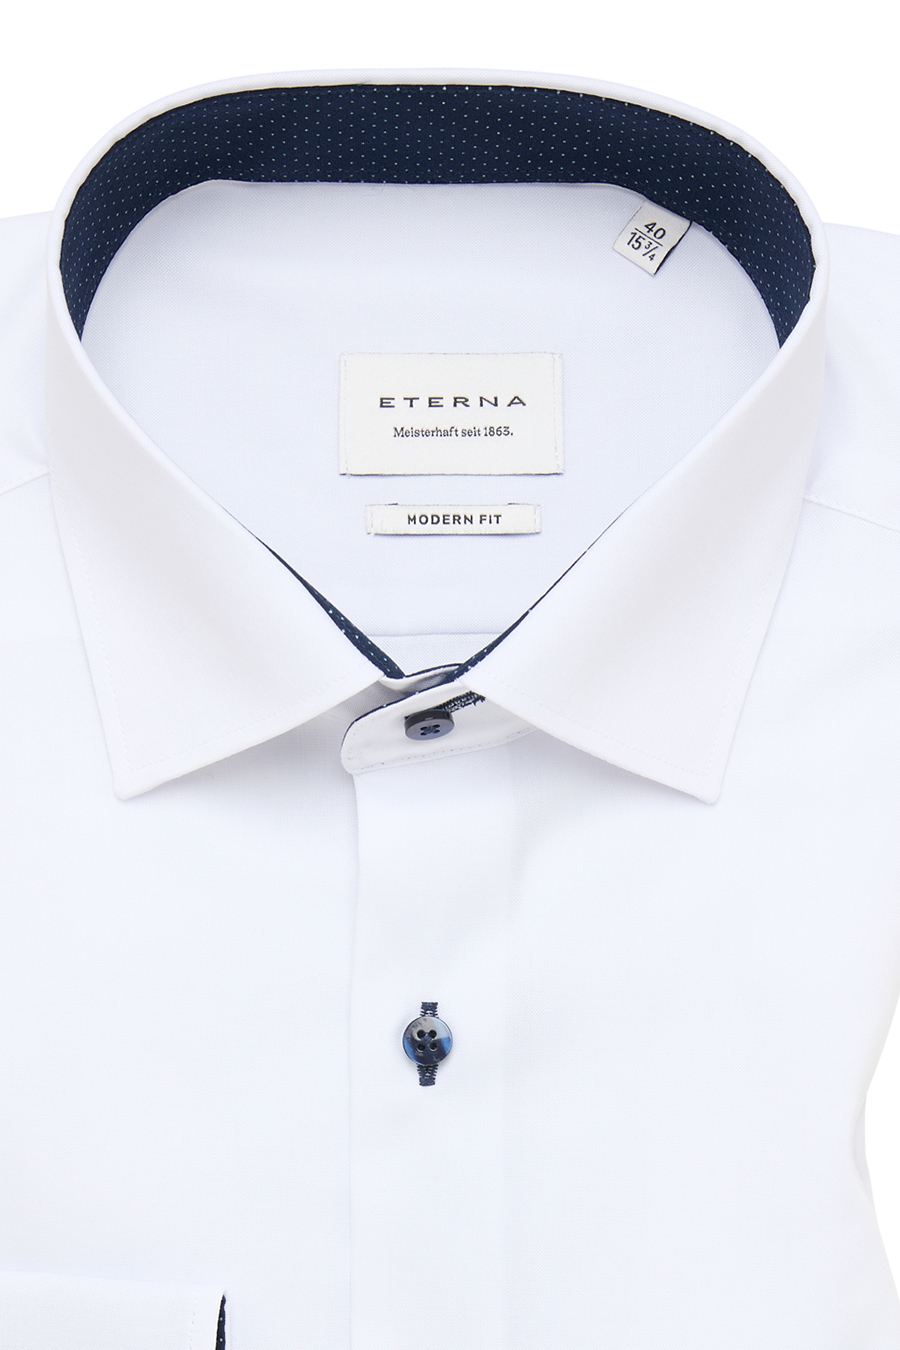 ETERNA Modern Fit Hemd super langer Arm Oxford weiß | Businesshemden